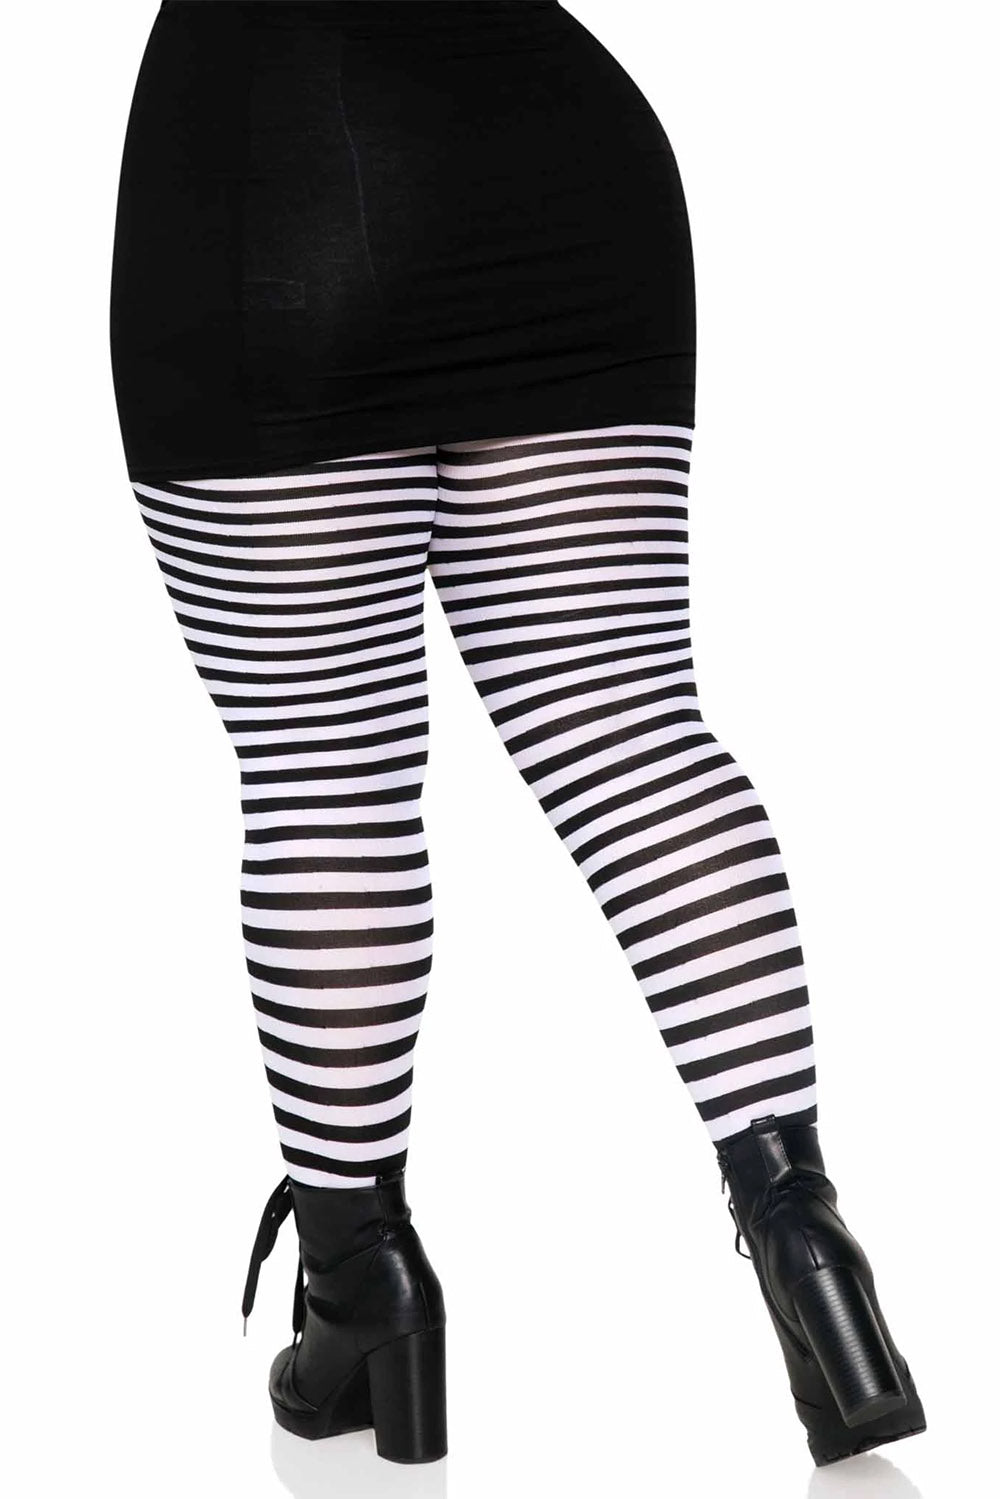 Cool Black And White Horizontal Striped Leggings | Zazzle